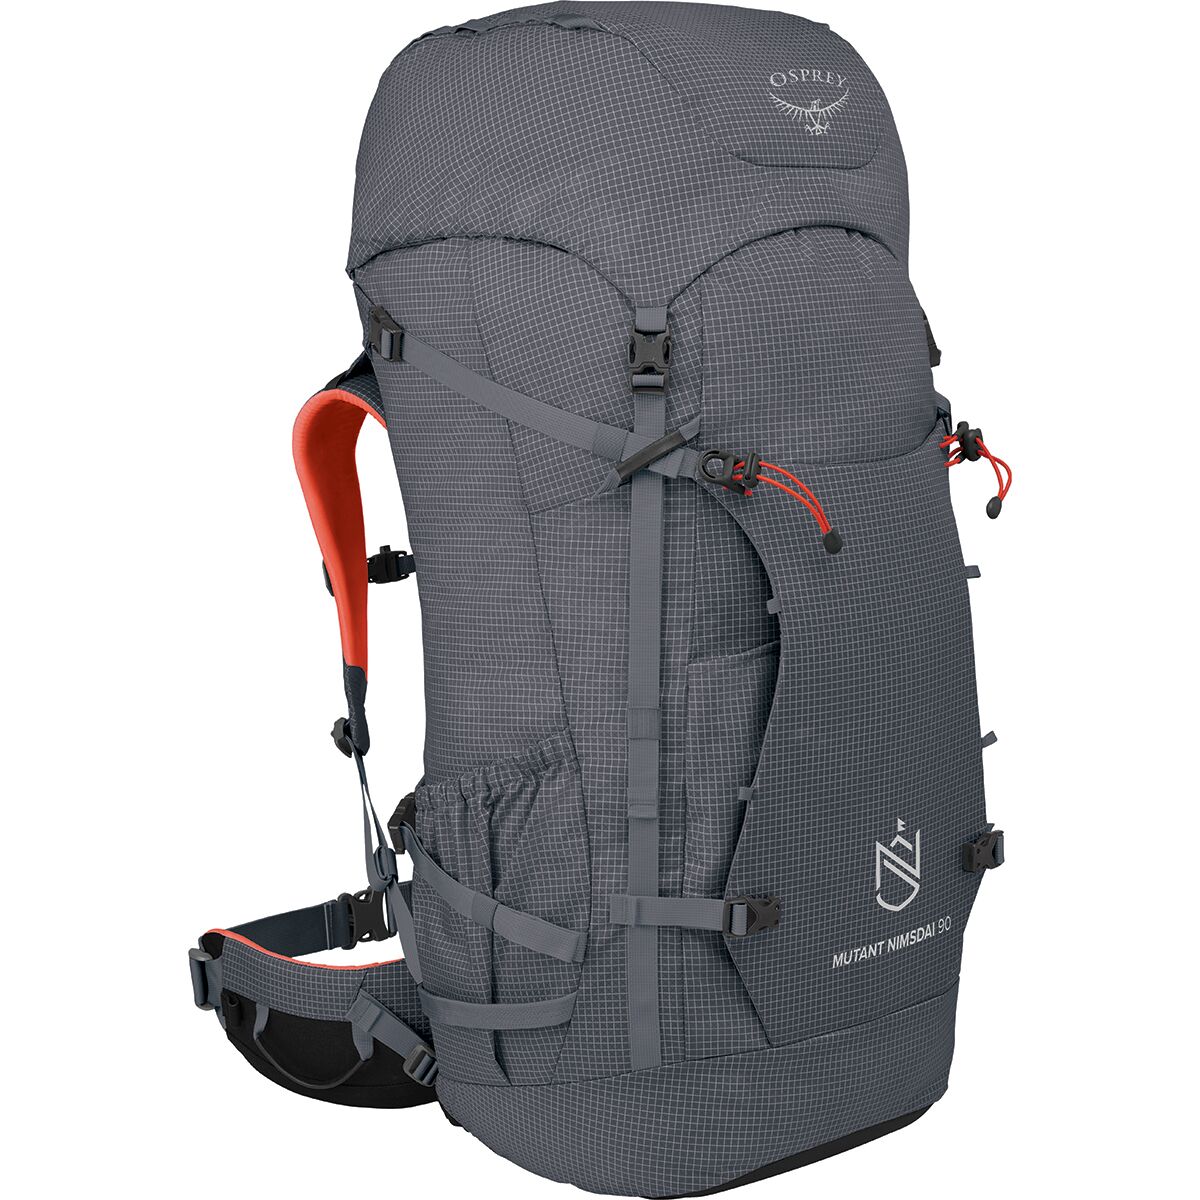 Osprey Packs Nimsdai Mutant 90L Backpack